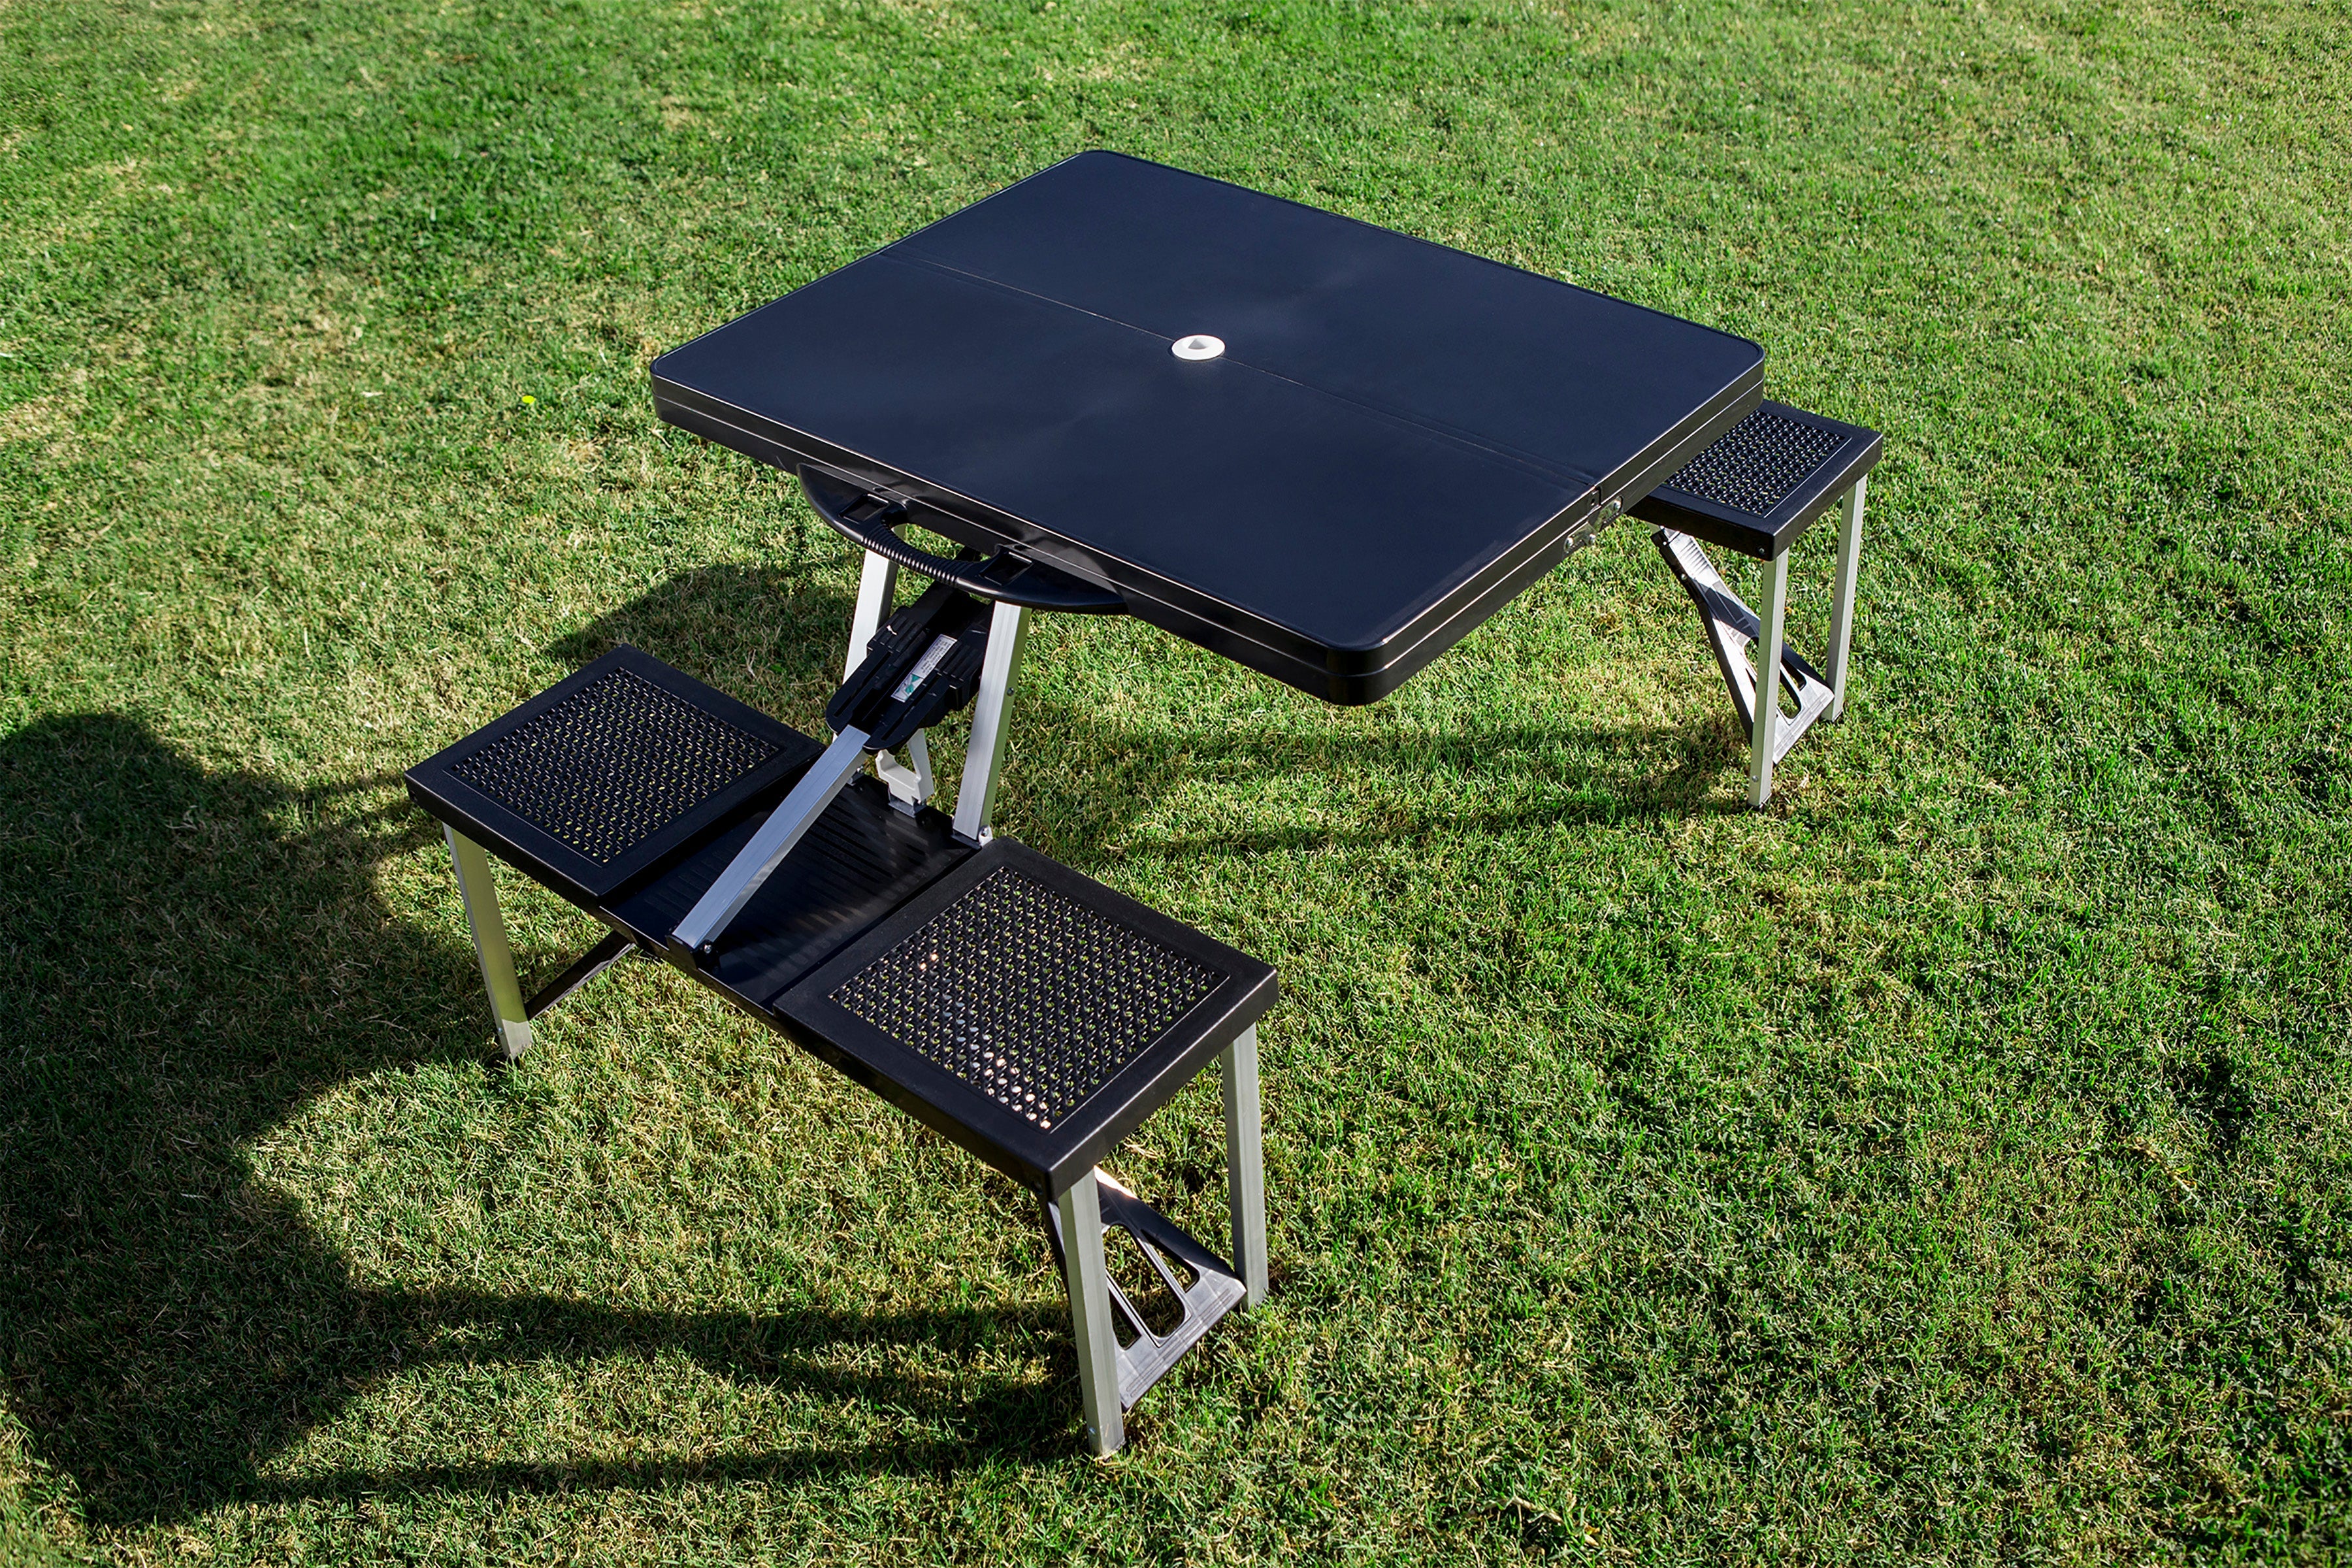 Hockey Rink - Carolina Hurricanes - Picnic Table Portable Folding Table with Seats